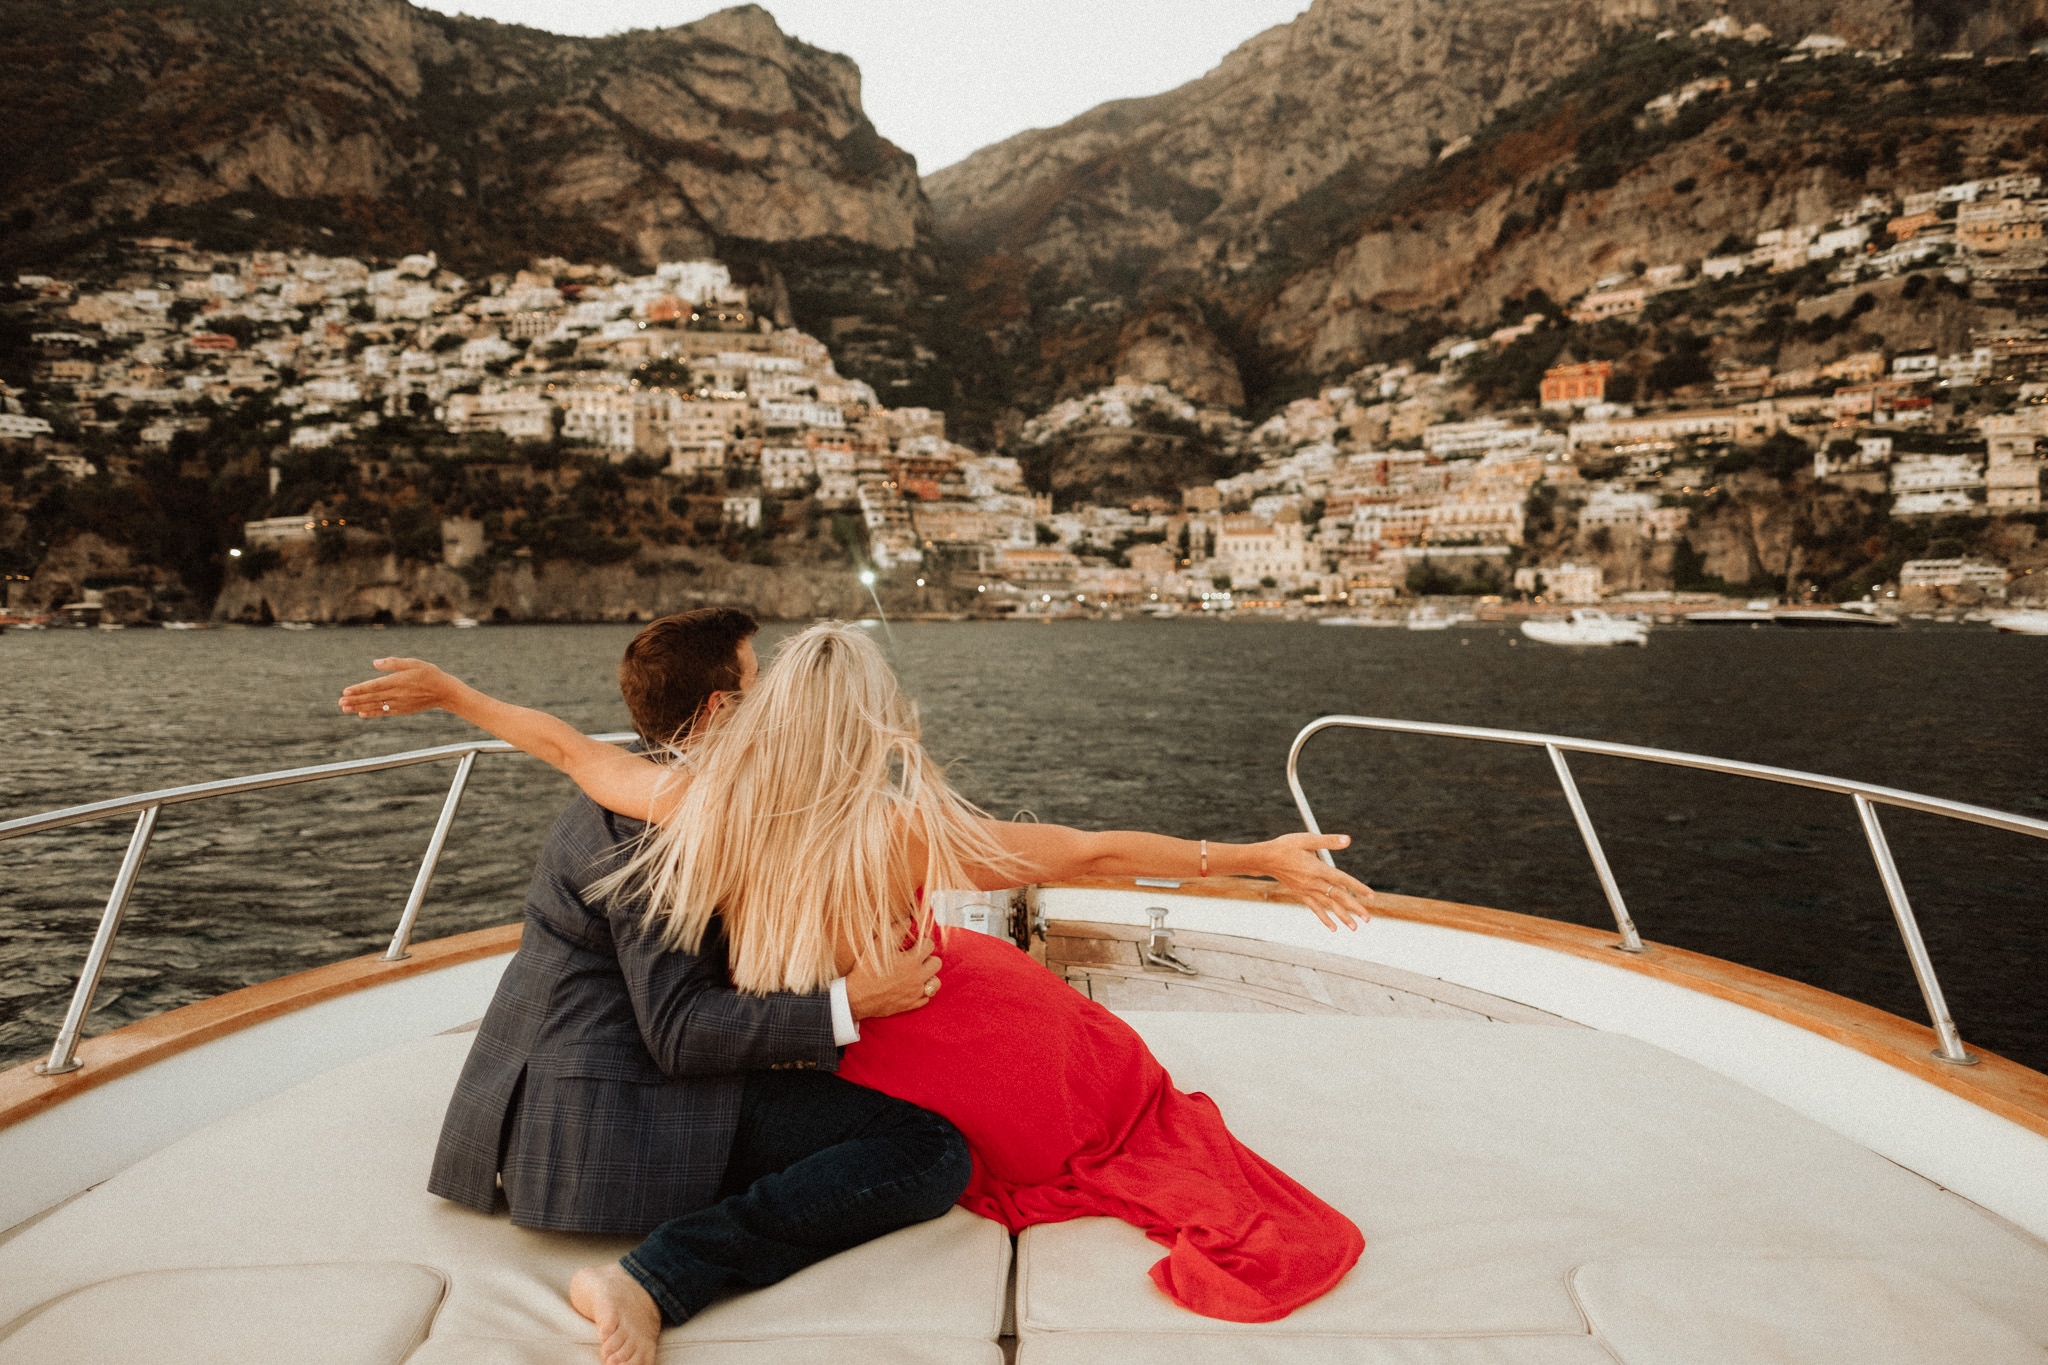 Positano Wedding Proposal on a Boat - Gallery